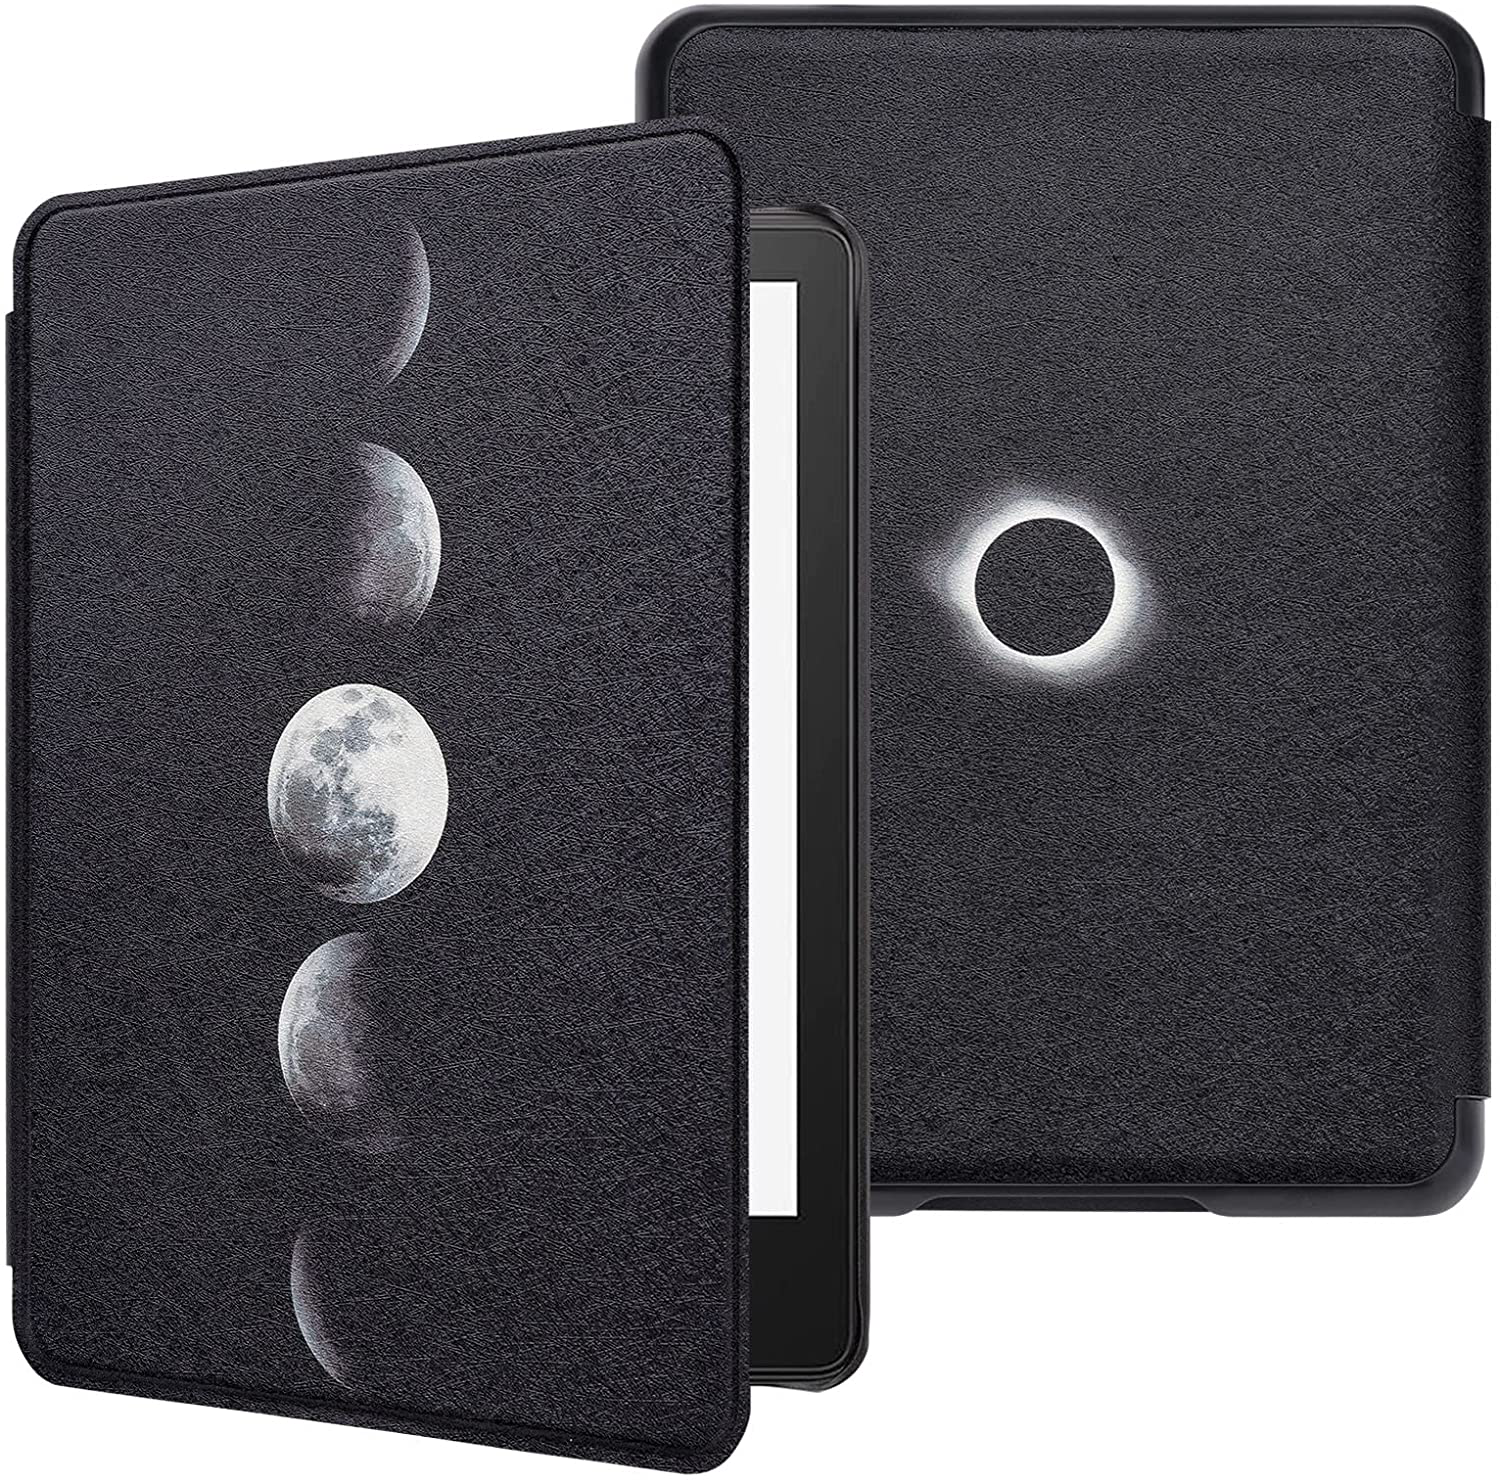 Premium Black Leather Case Cover for Kindle Paperwhite / Signature Edition  6.8